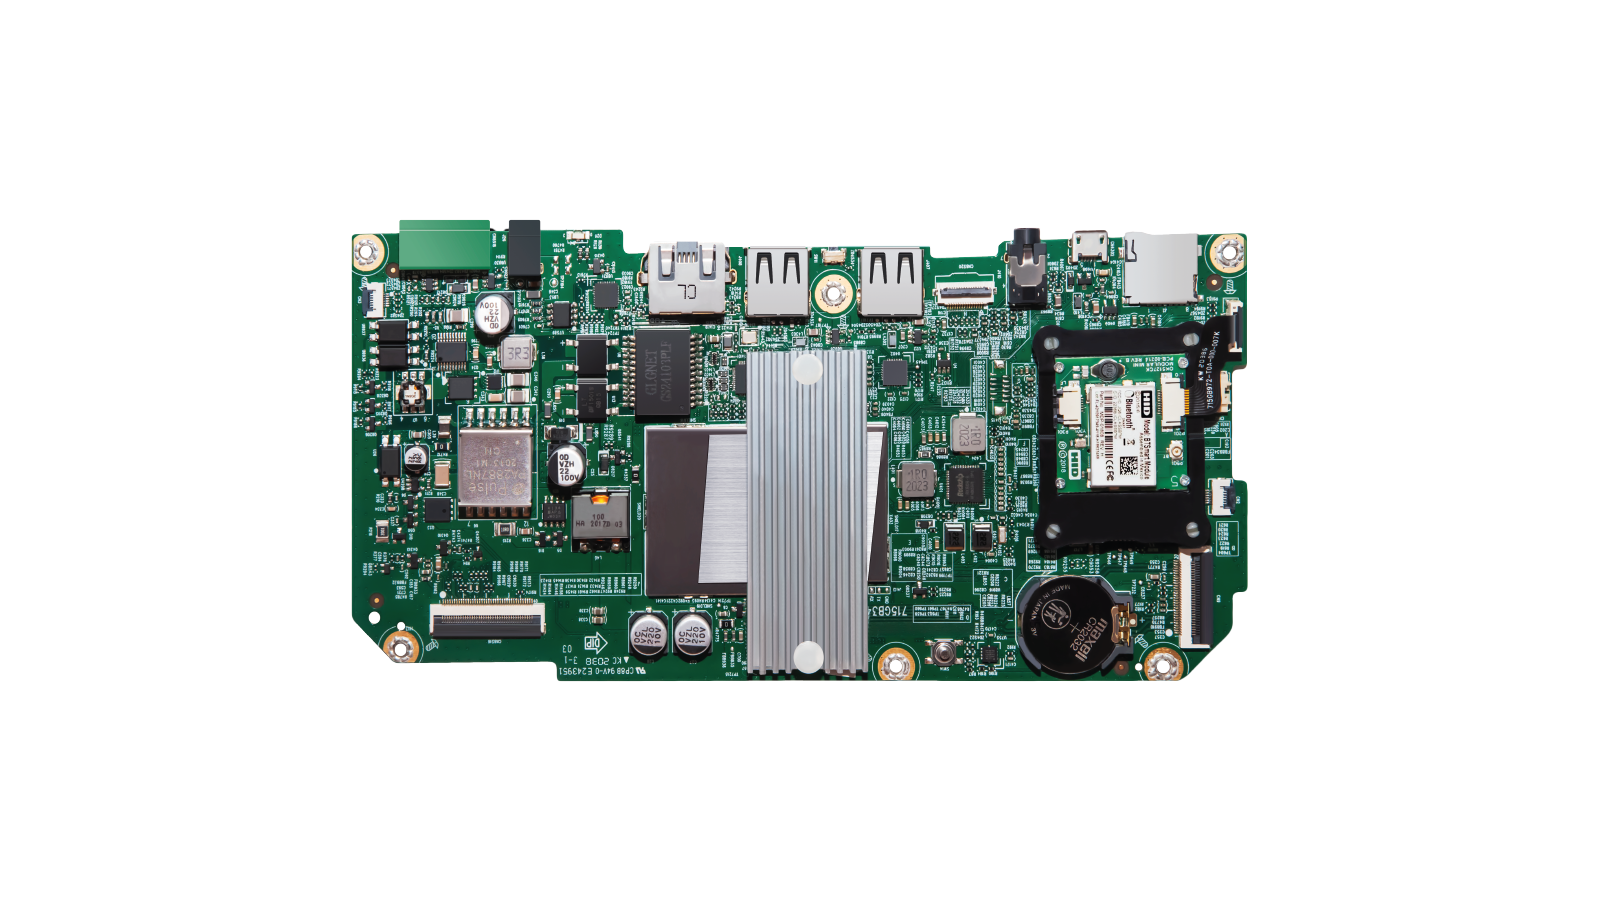 LV-Tron LVB-3566-2 embedded board using Rockchip RK-3566 chipset